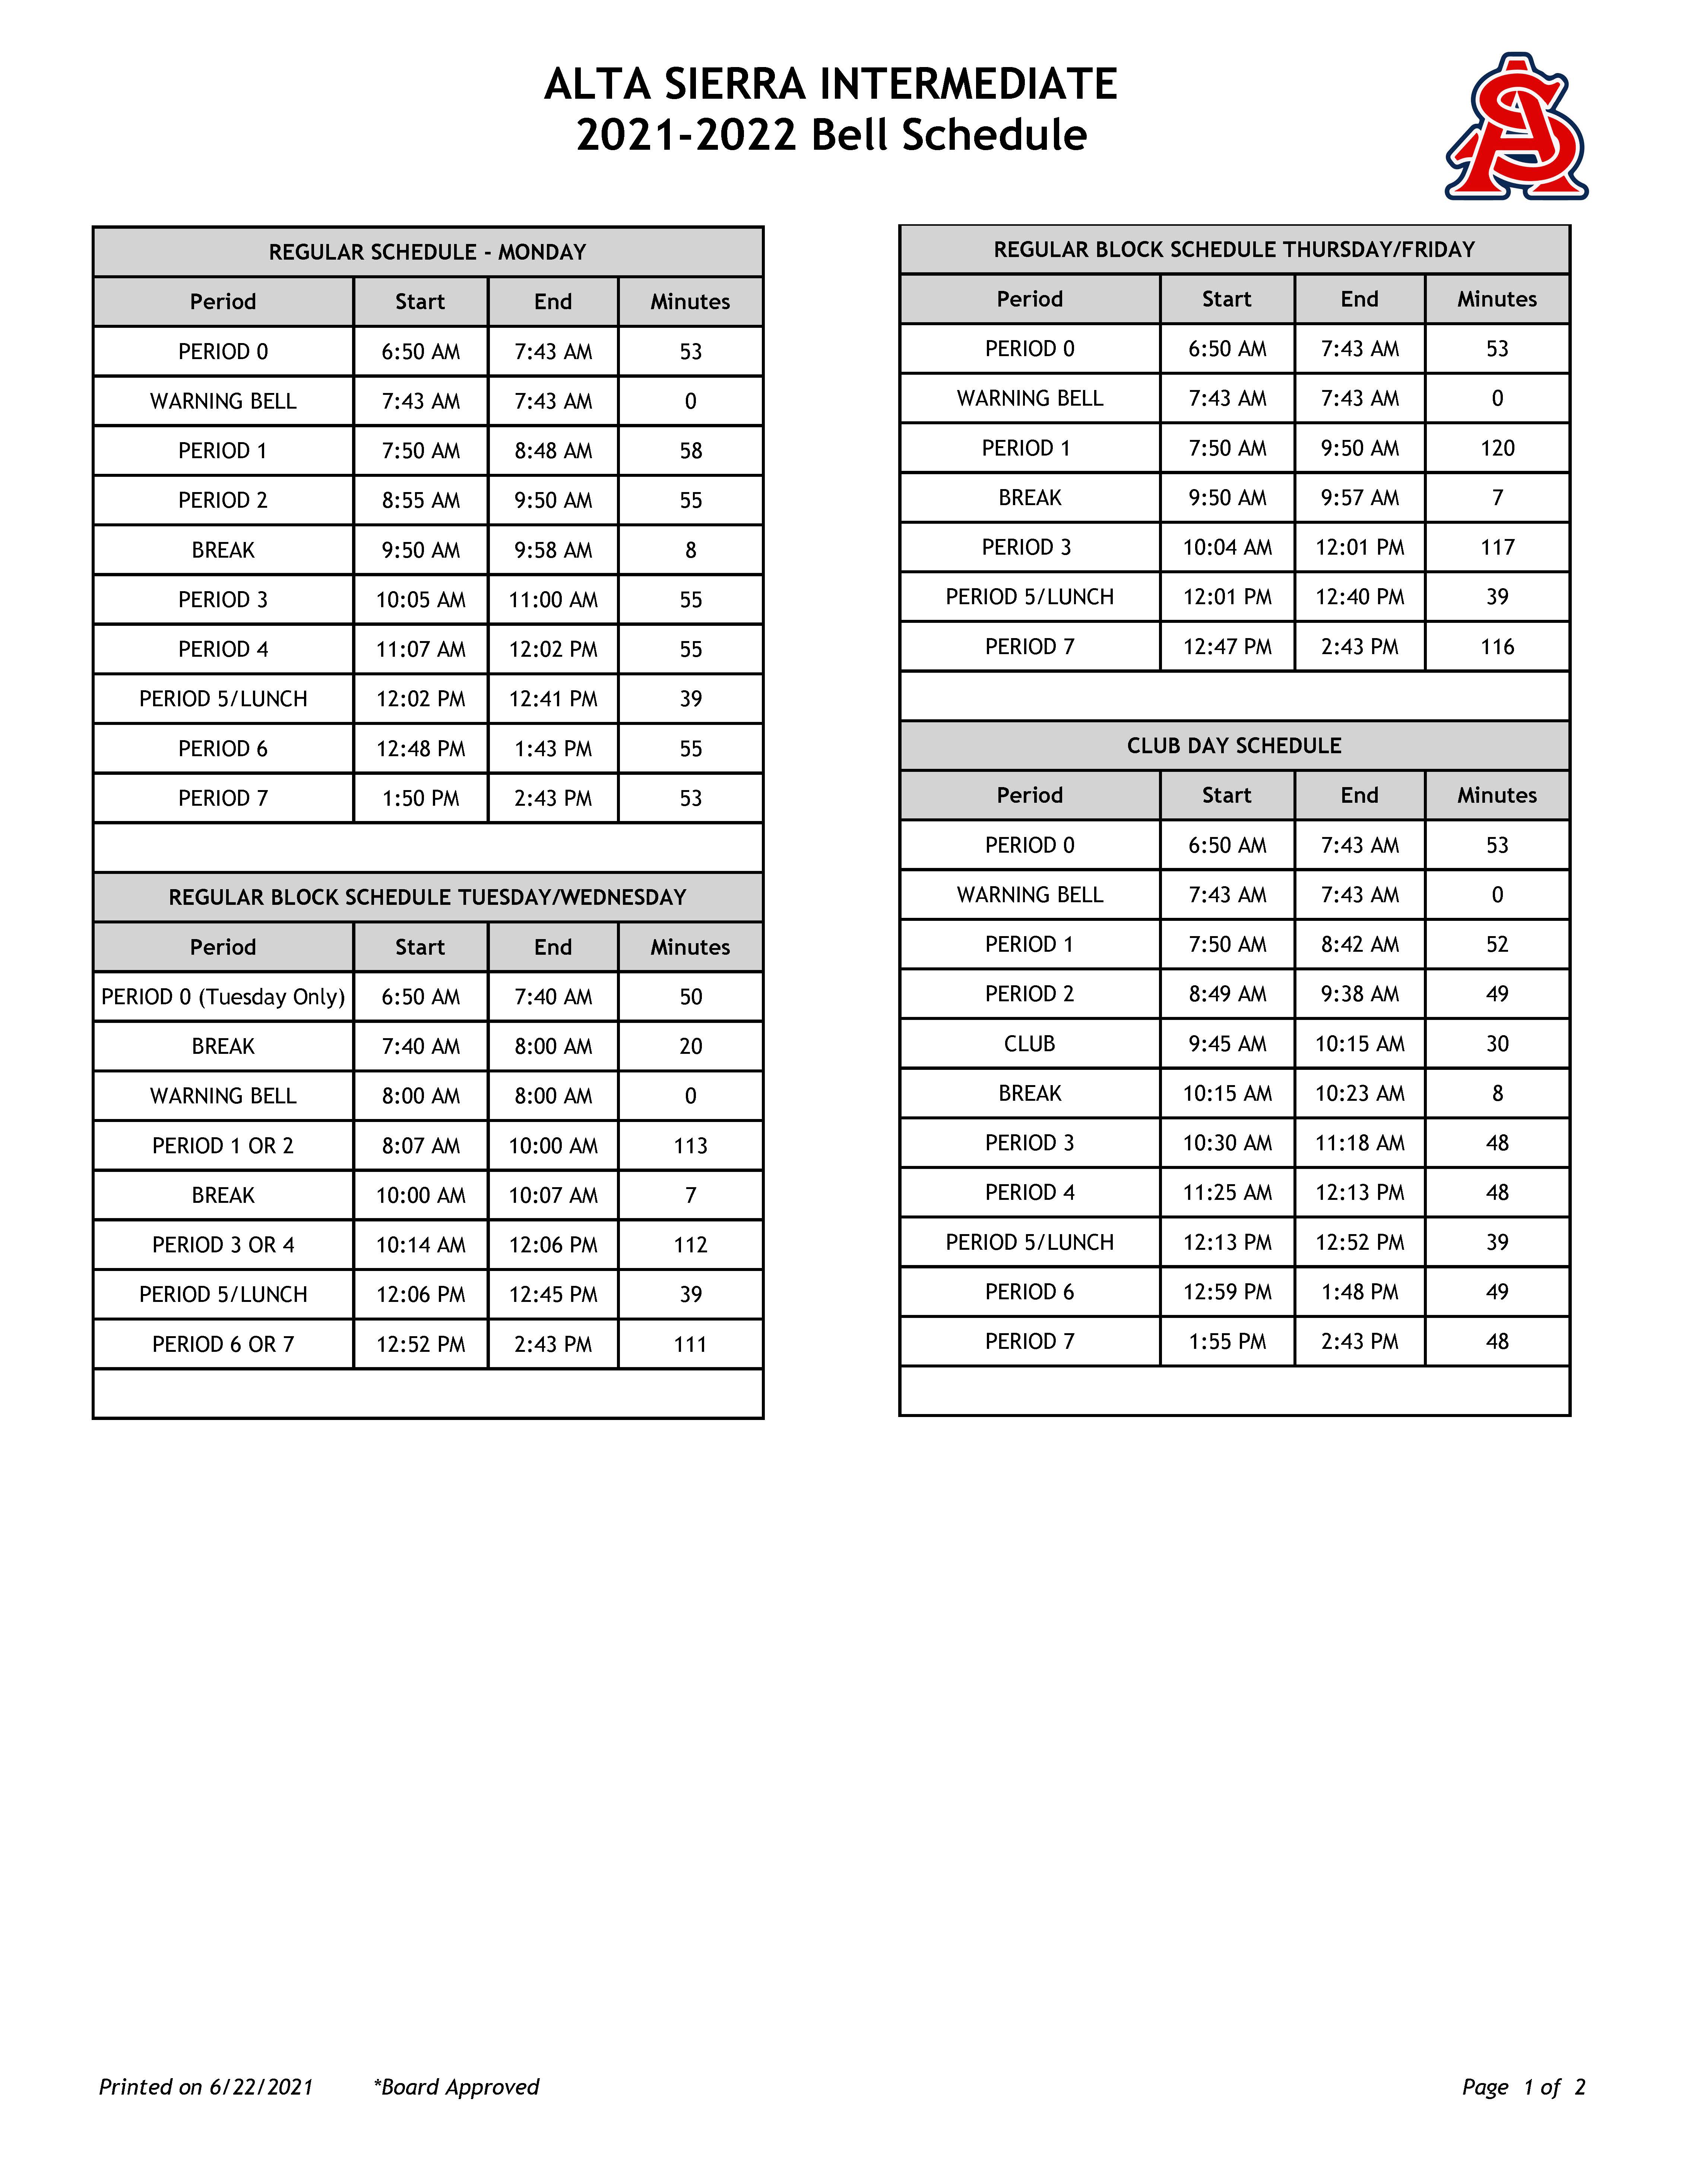 ASI Bell Schedule P1